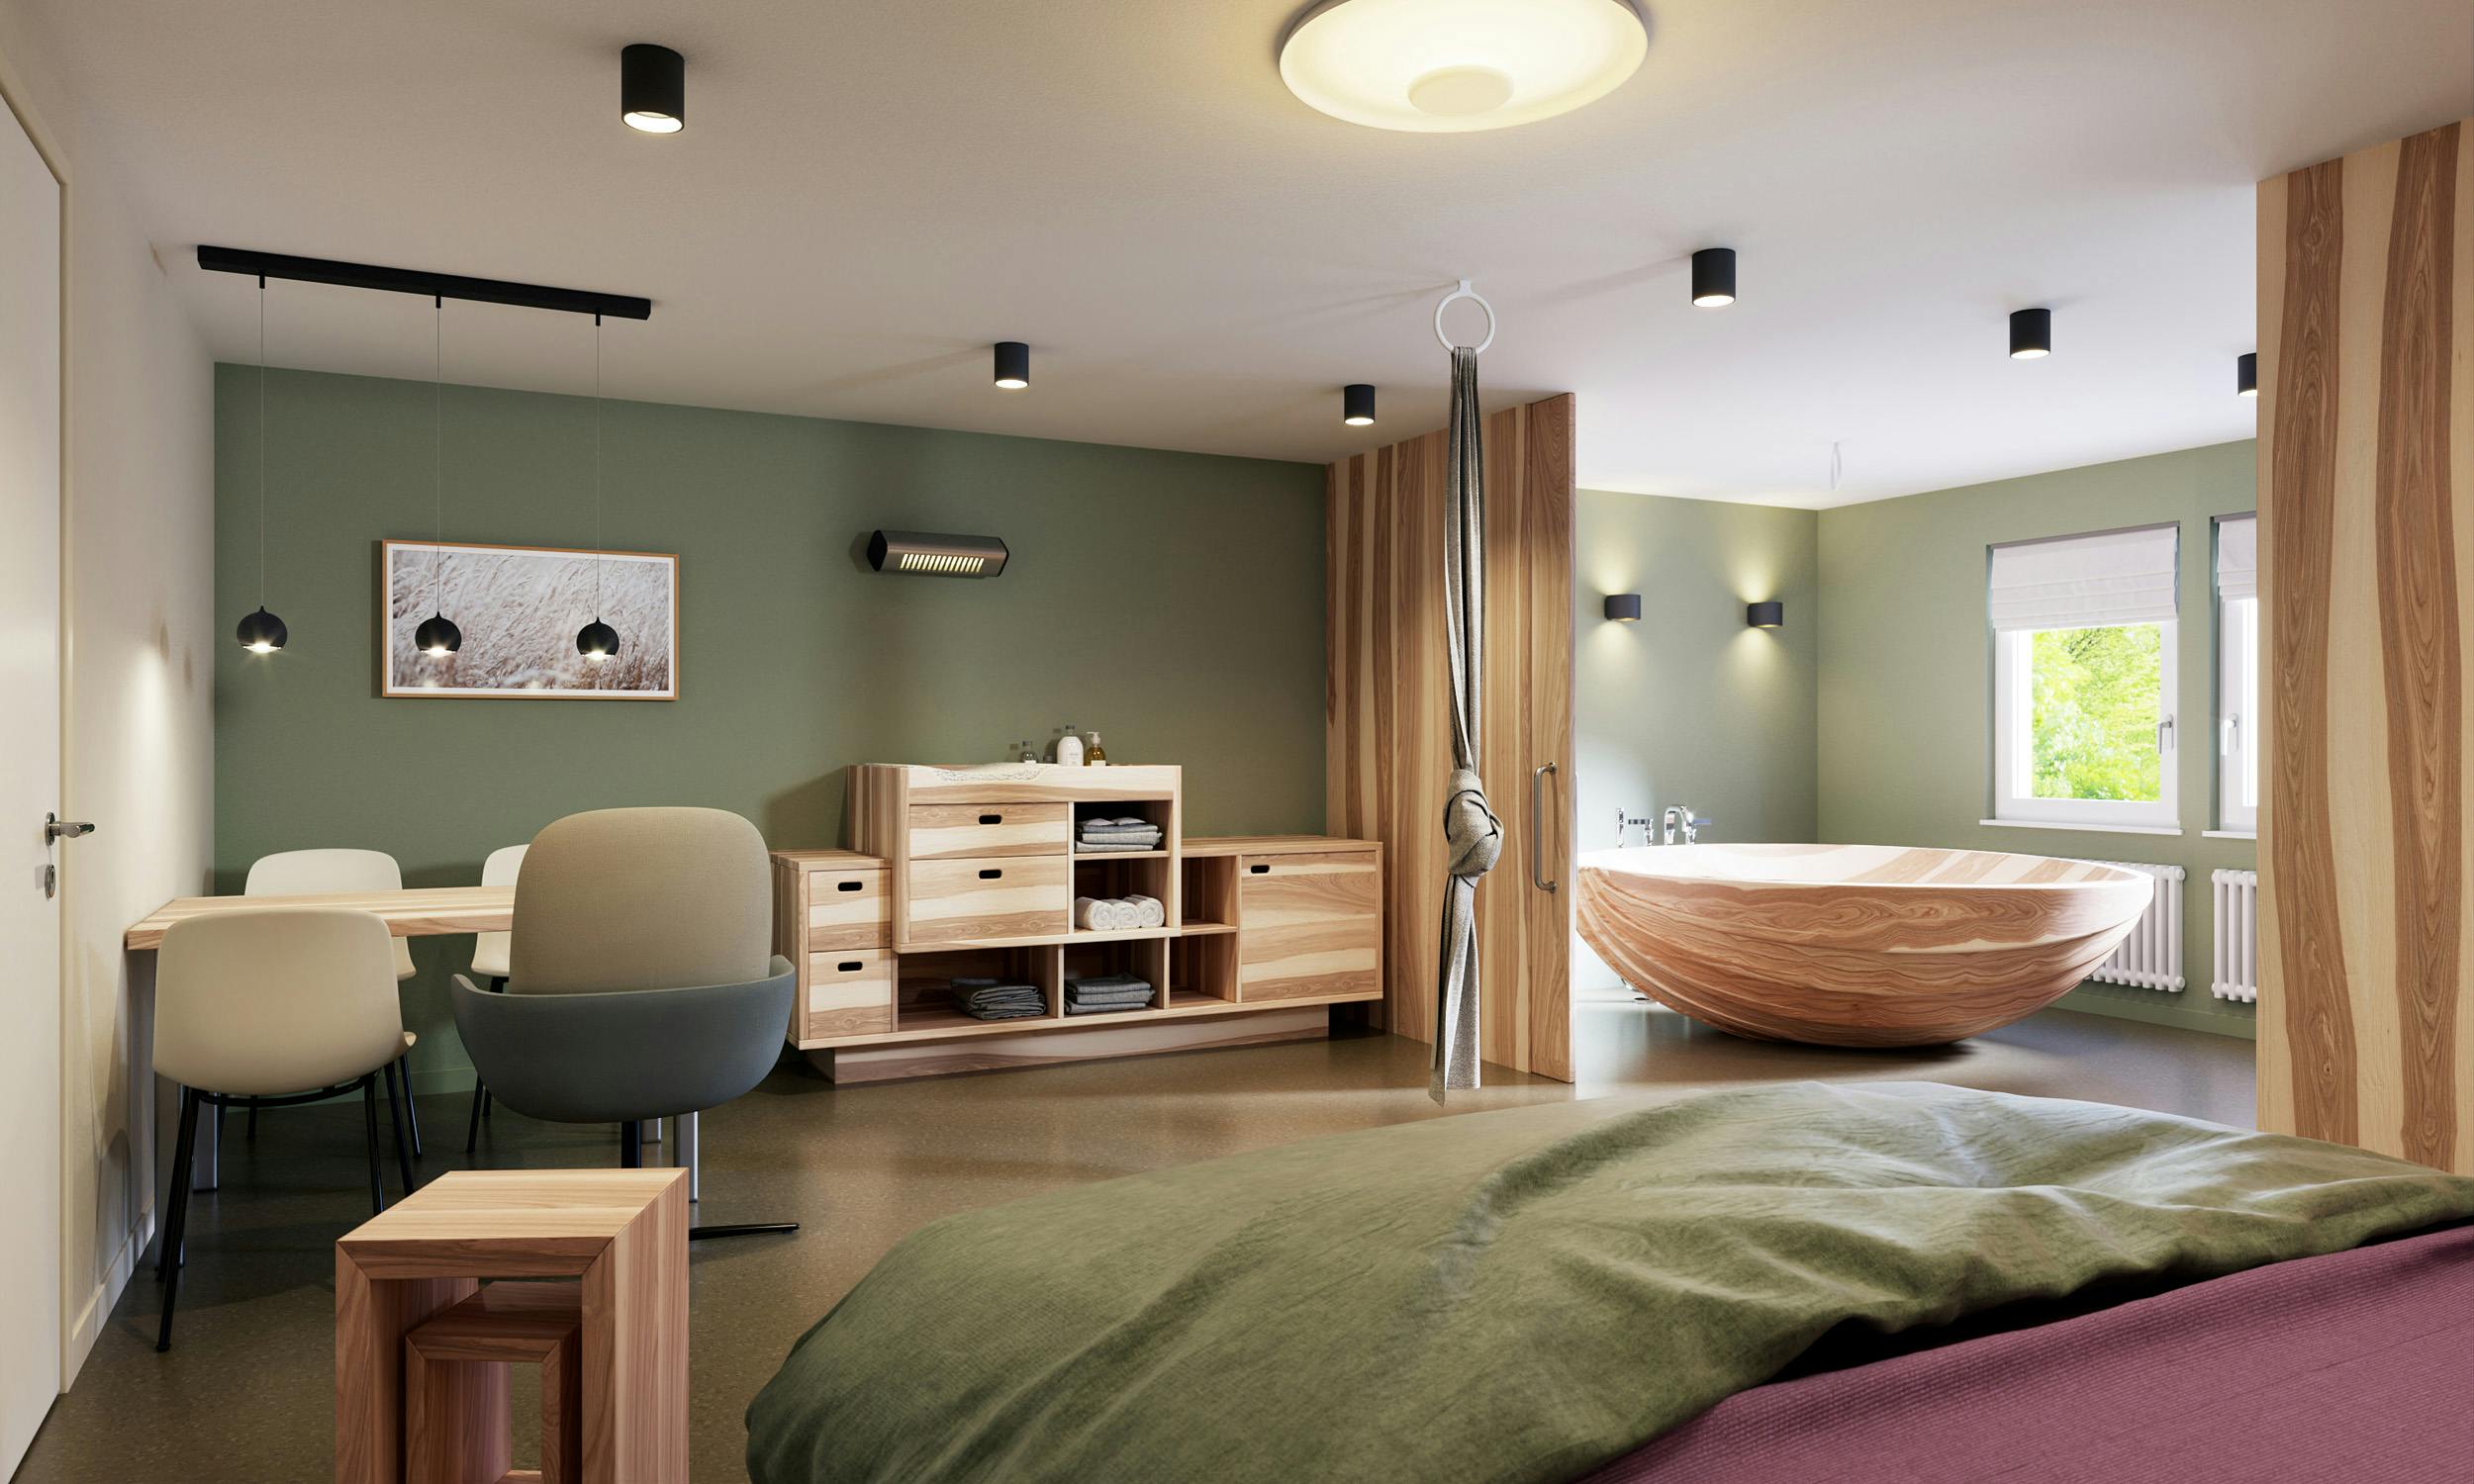 Geburtshaus Zollikerberg: Modern room with green walls, wooden furniture and bathtub.